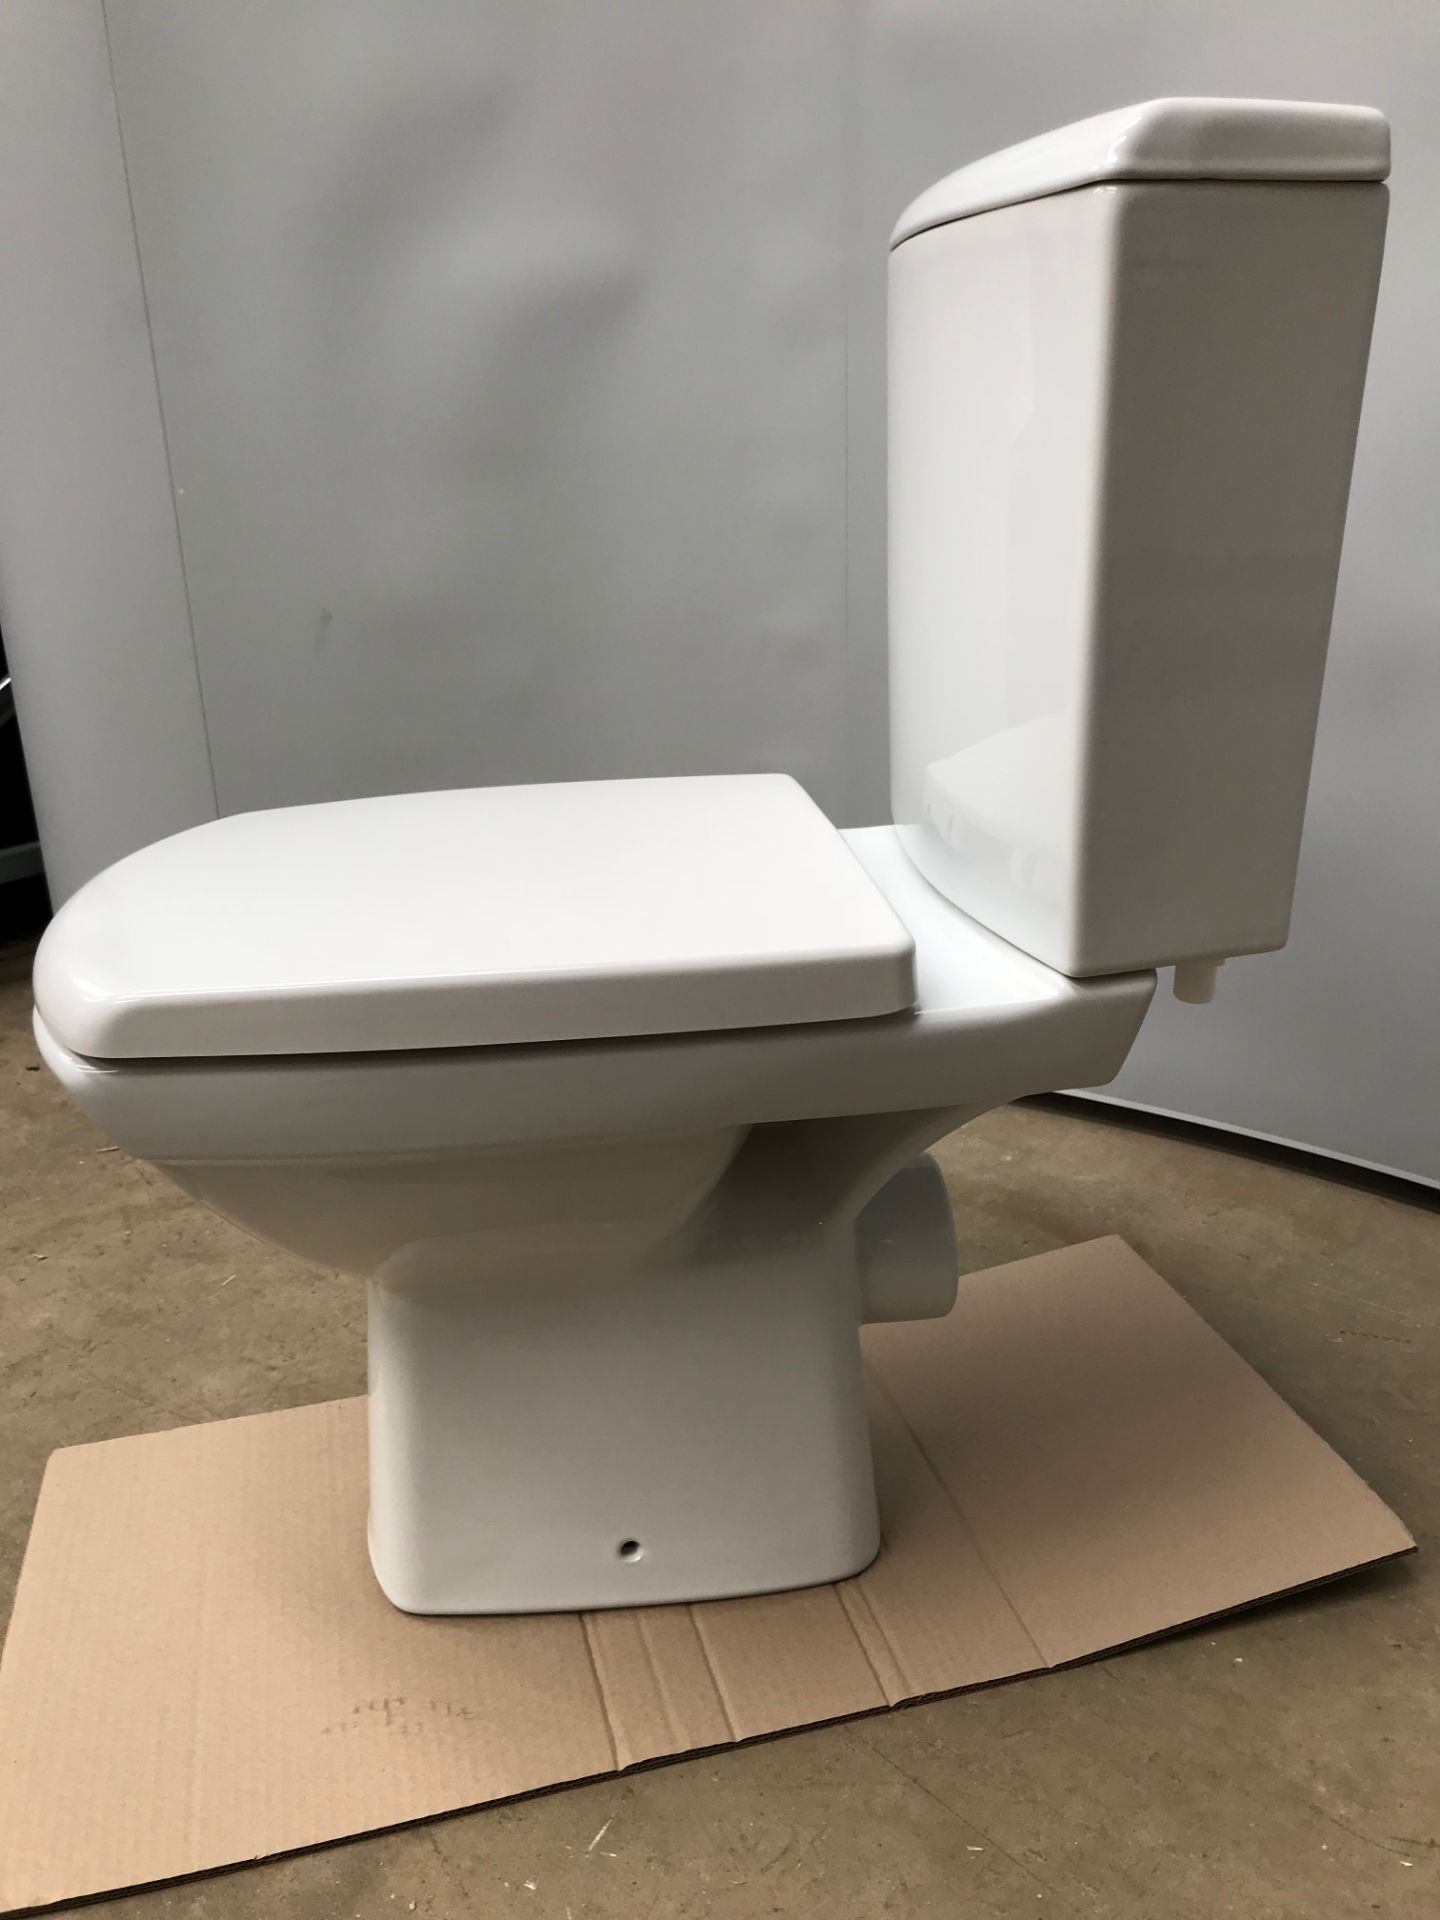 6 x Navassa Close Coupled Toilet with Soft Closure - Image 4 of 8